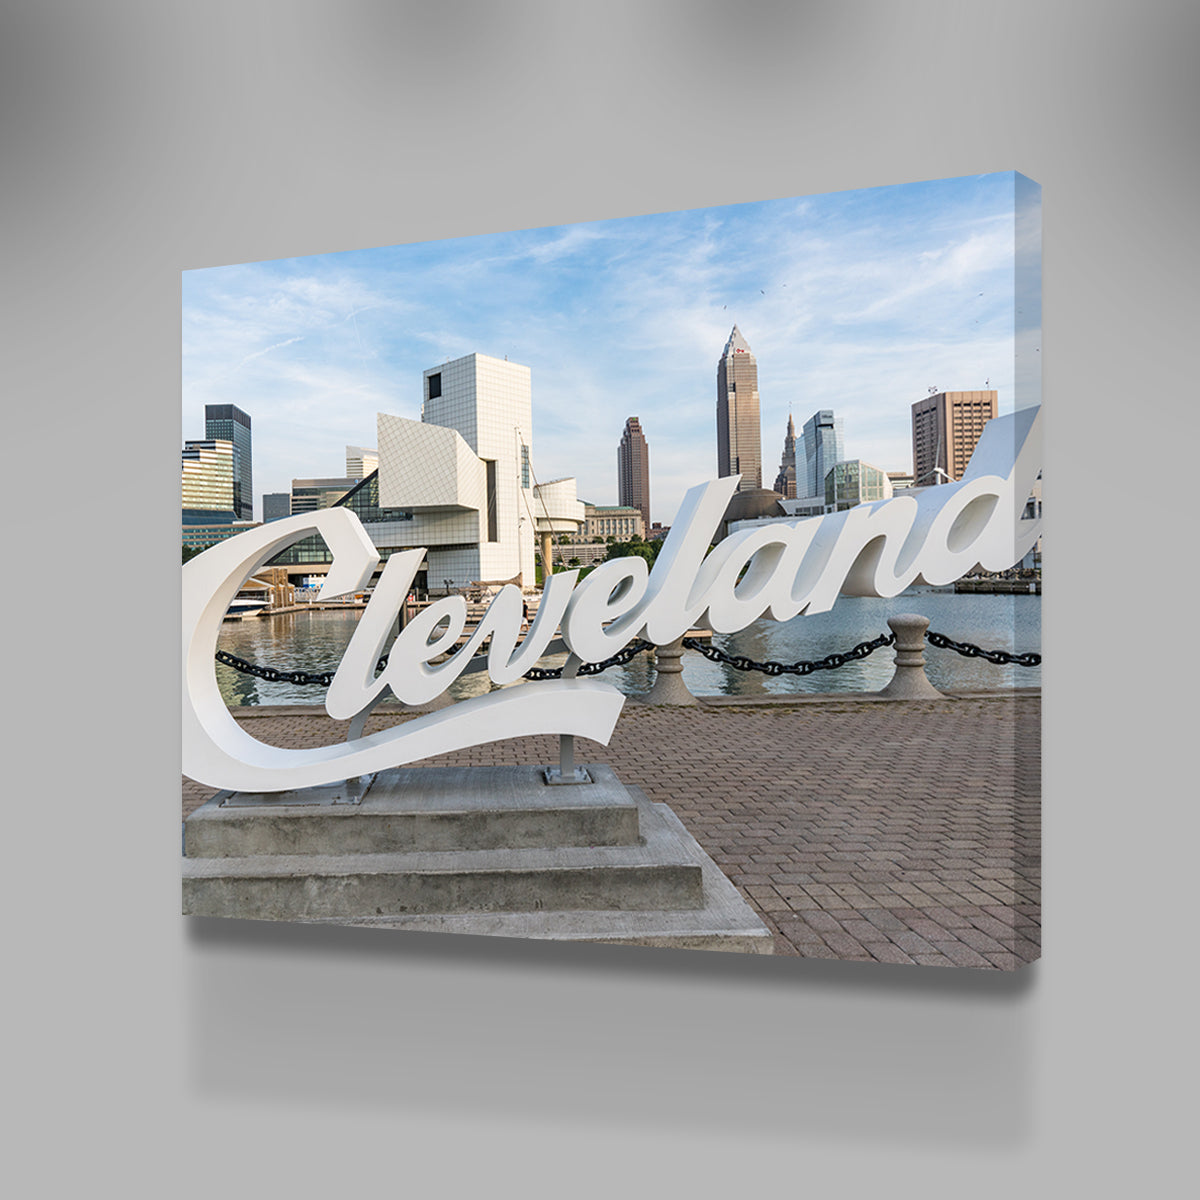 Cleveland Sign